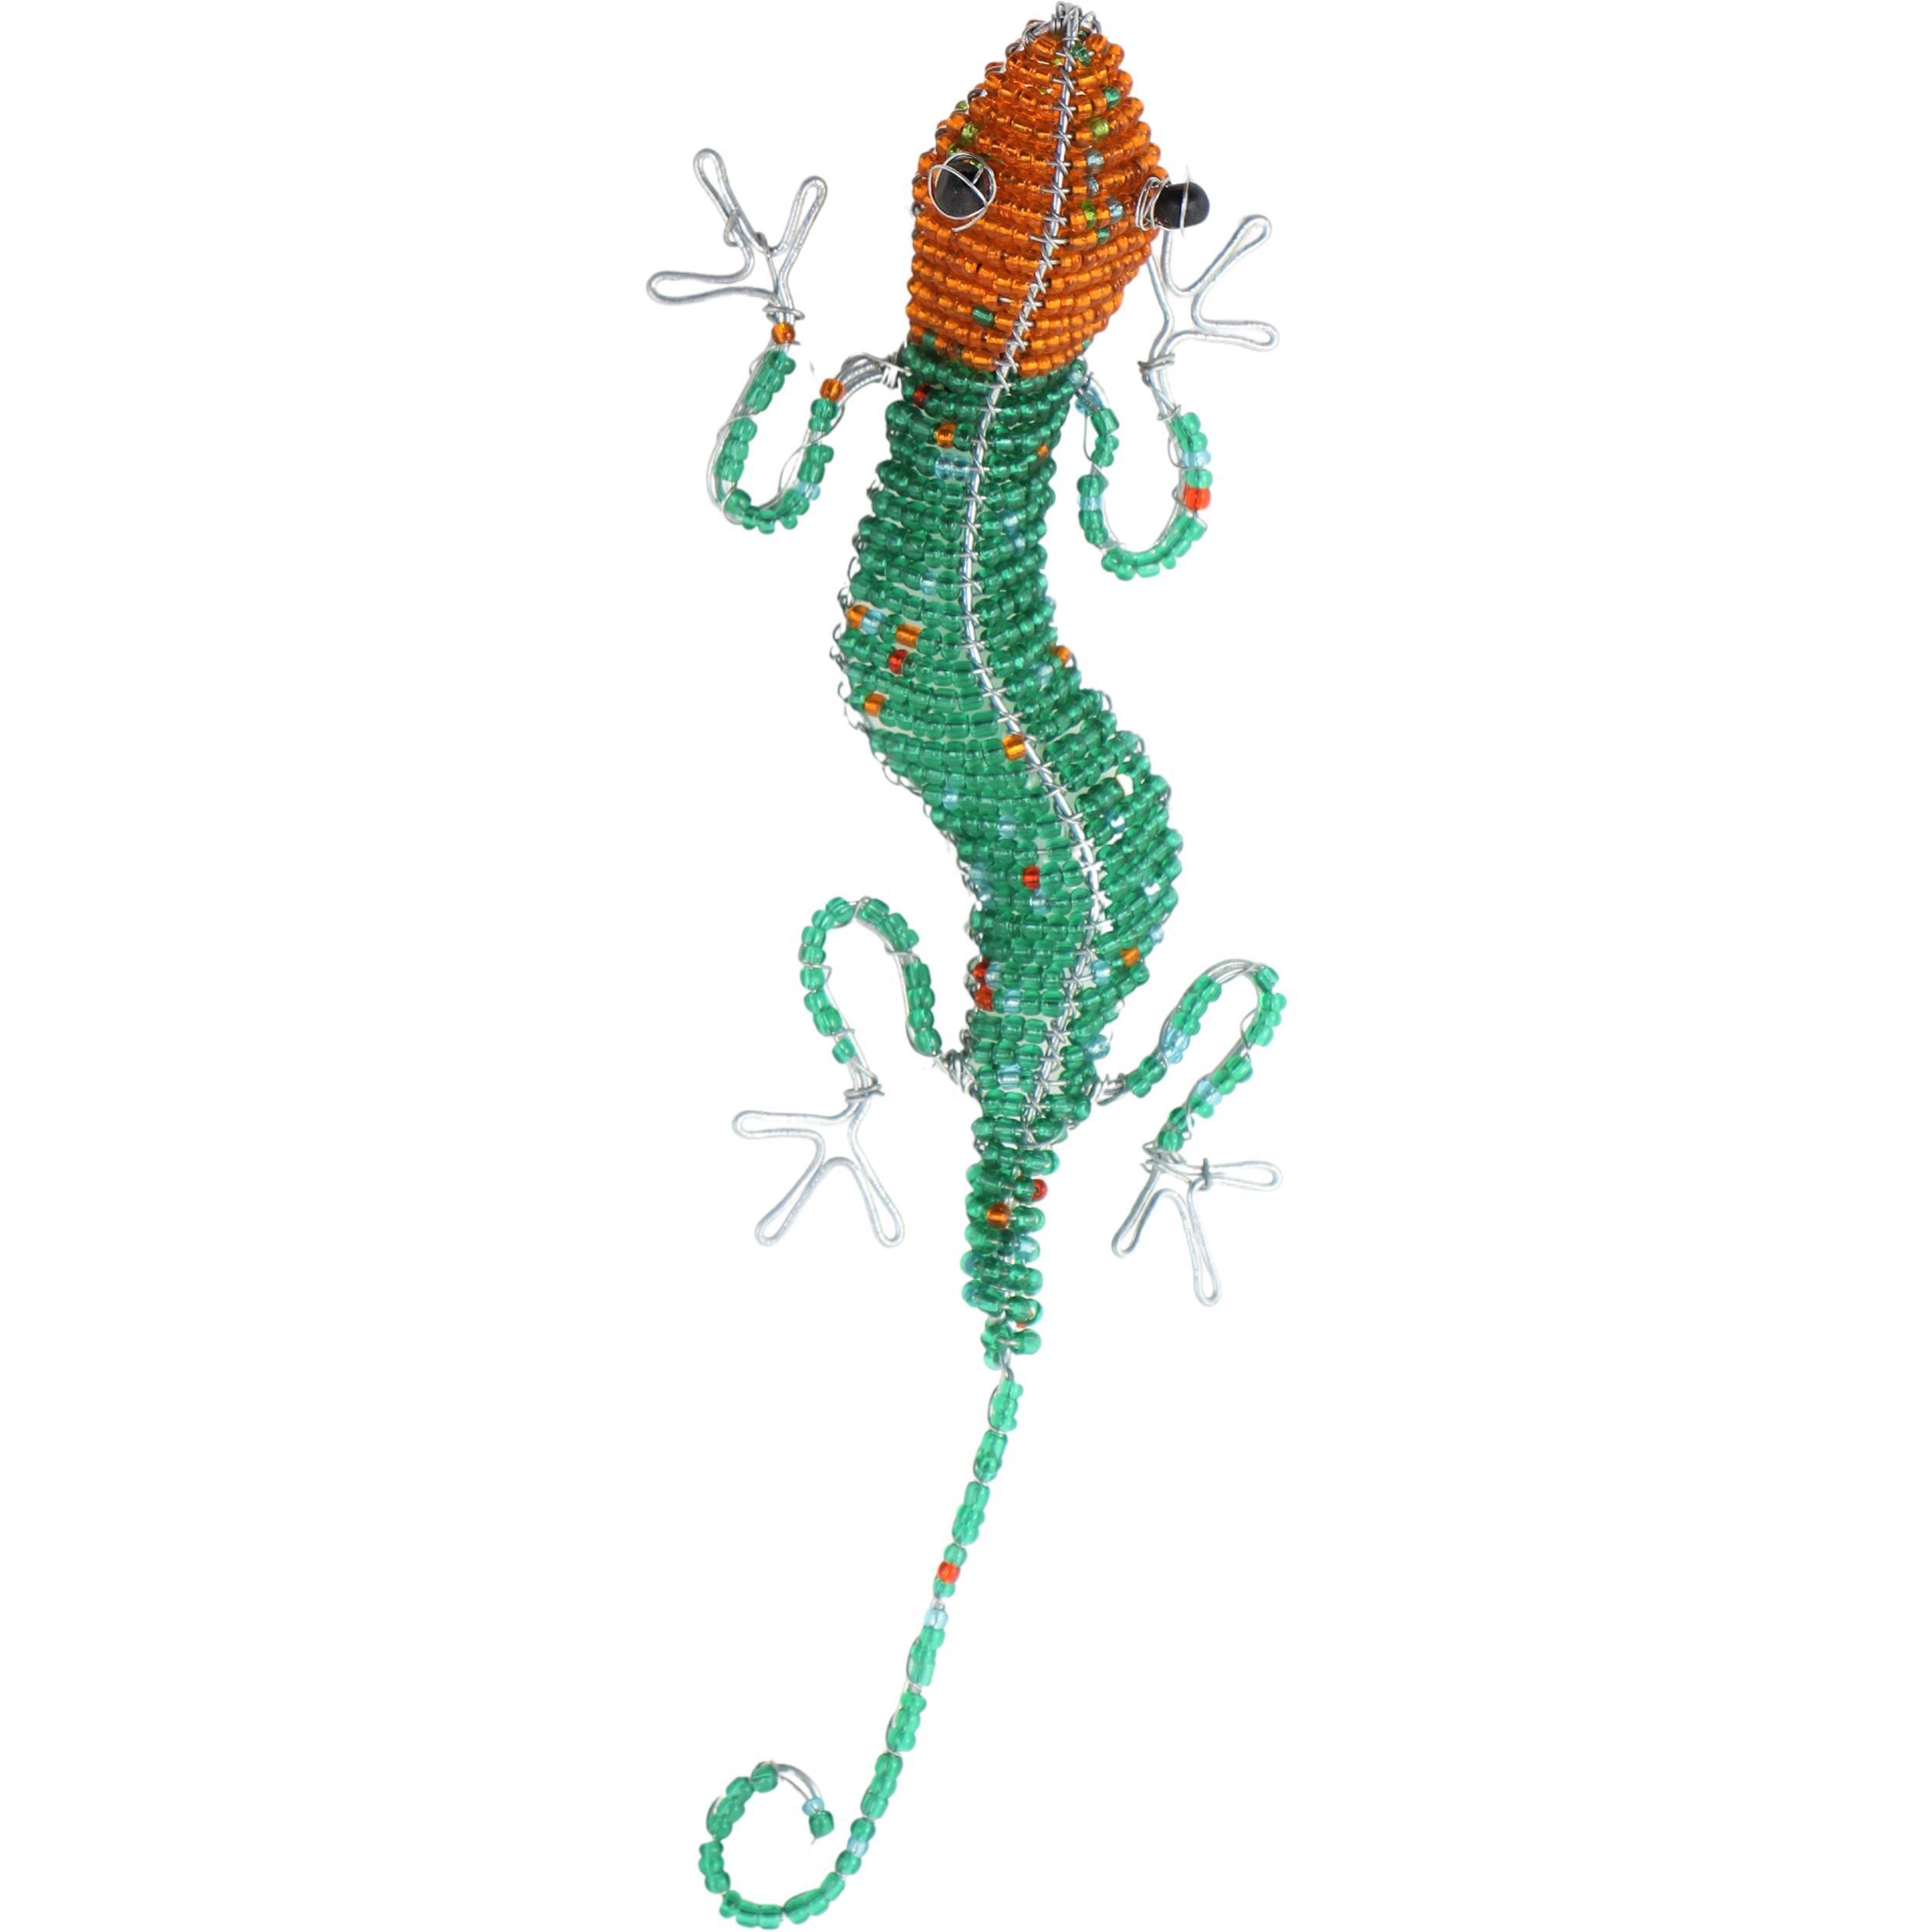 Shona Tribe Wire and Beaded Animals - Lizard ~1.2" Tall